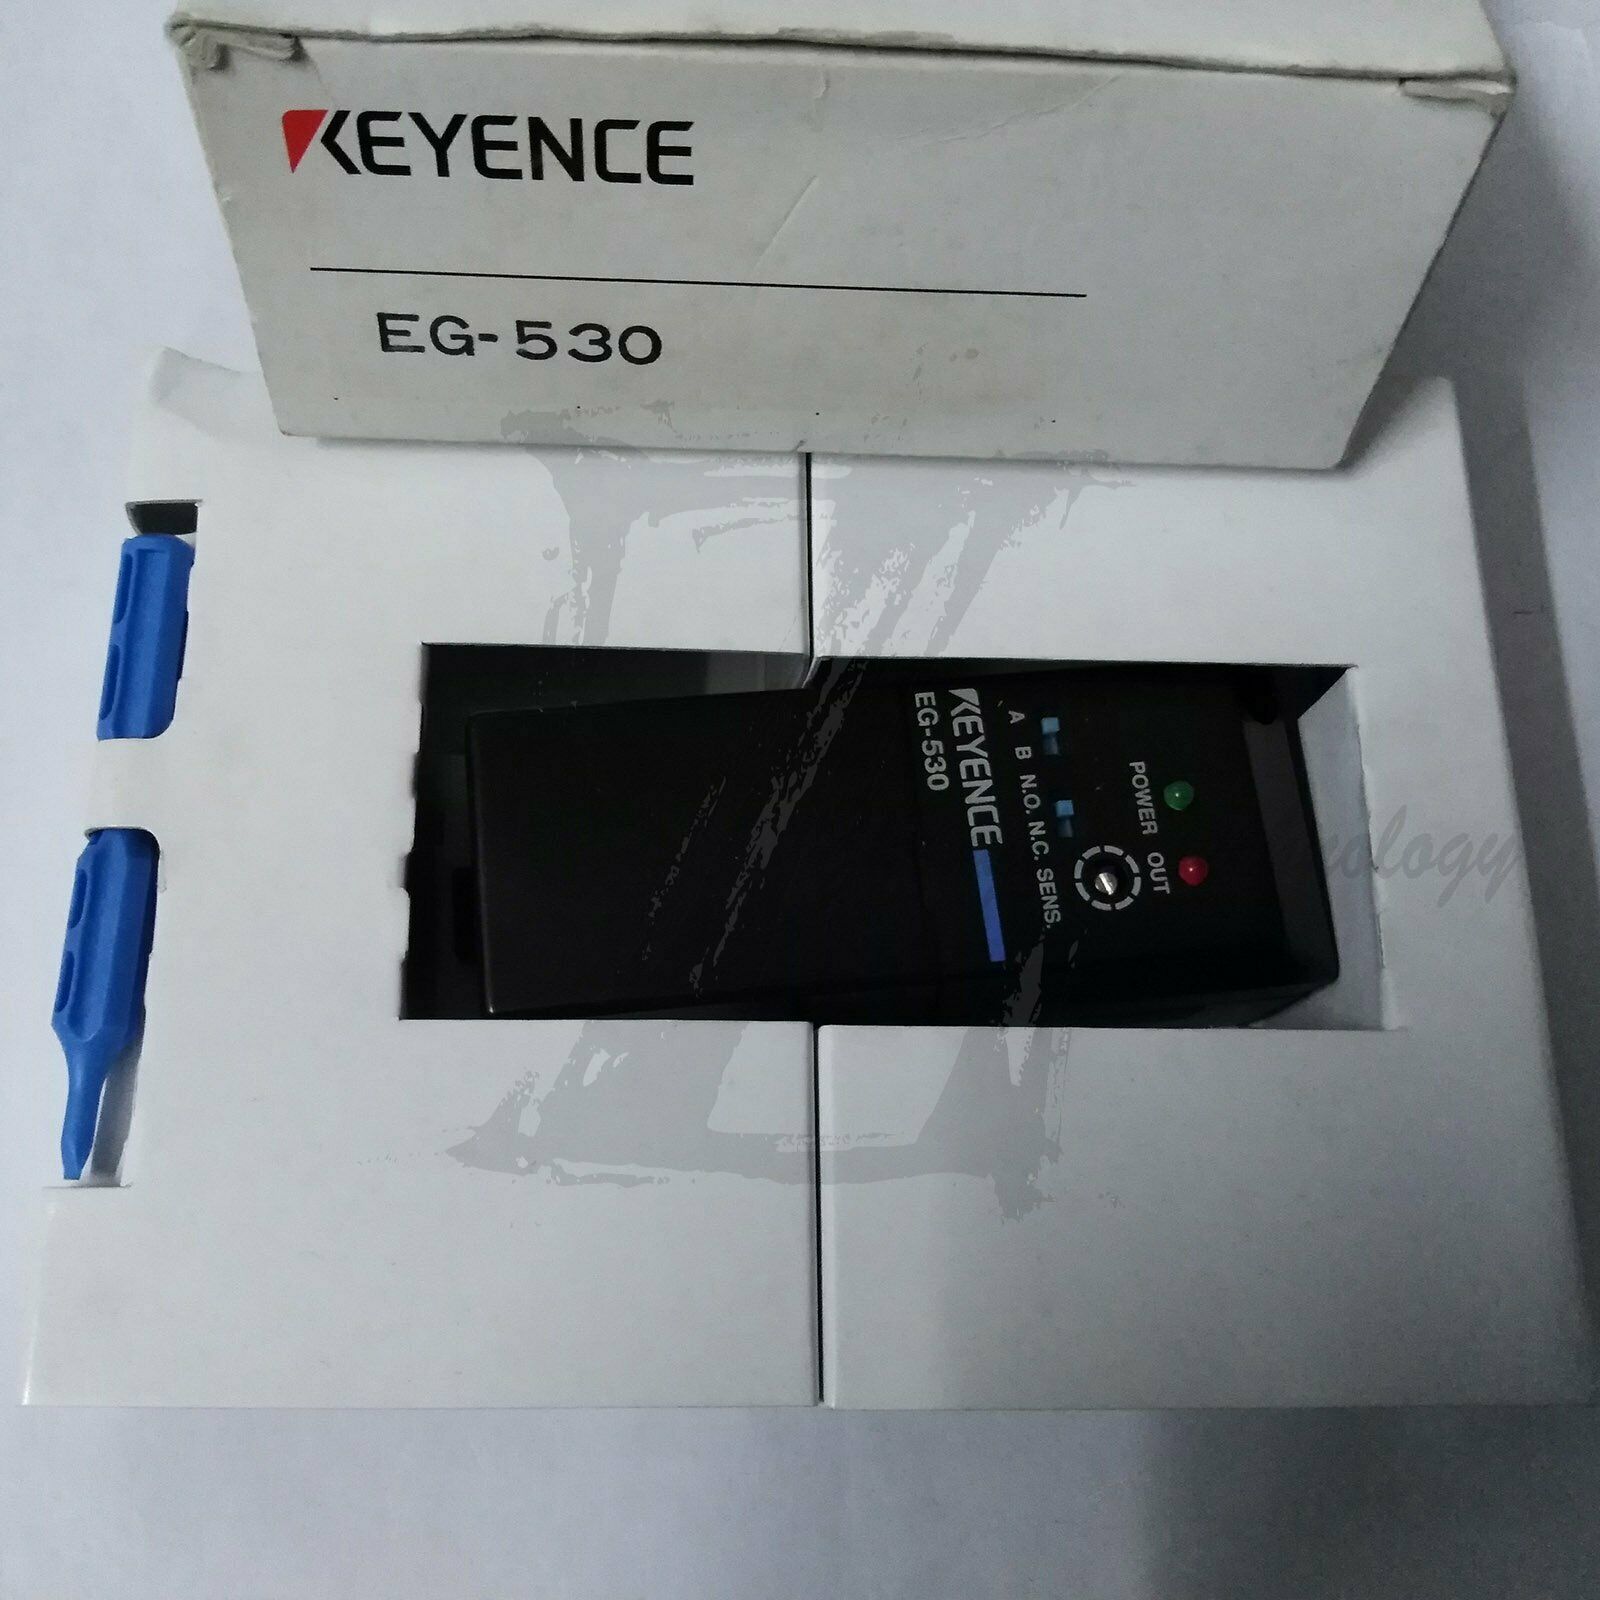 1pcs NEW KEYENCE EG-530 Positioning sensor KOEED 101-200, 90%, import_2020_10_10_031751, Keyence, Other, validate-product-description